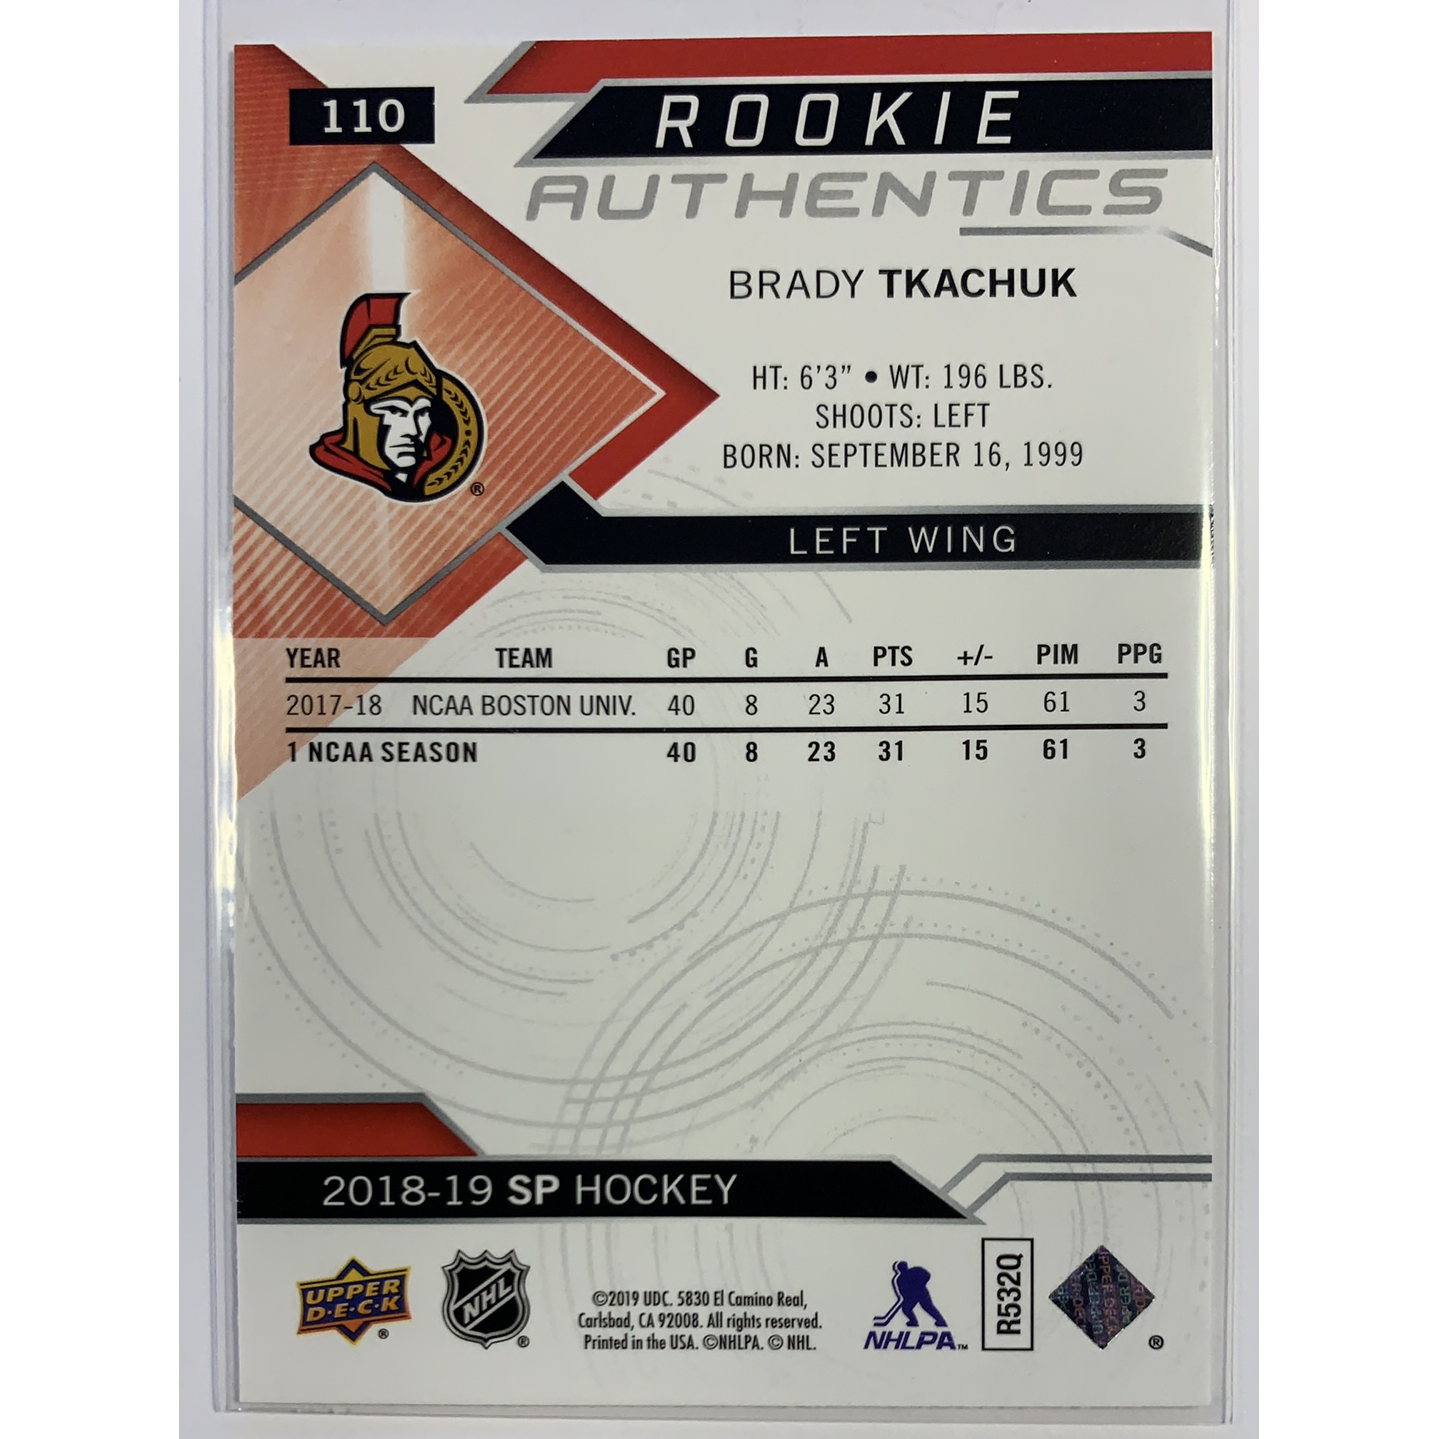  2018-19 Upper Deck SP Brady Tkachuk Rookie Authentics  Local Legends Cards & Collectibles